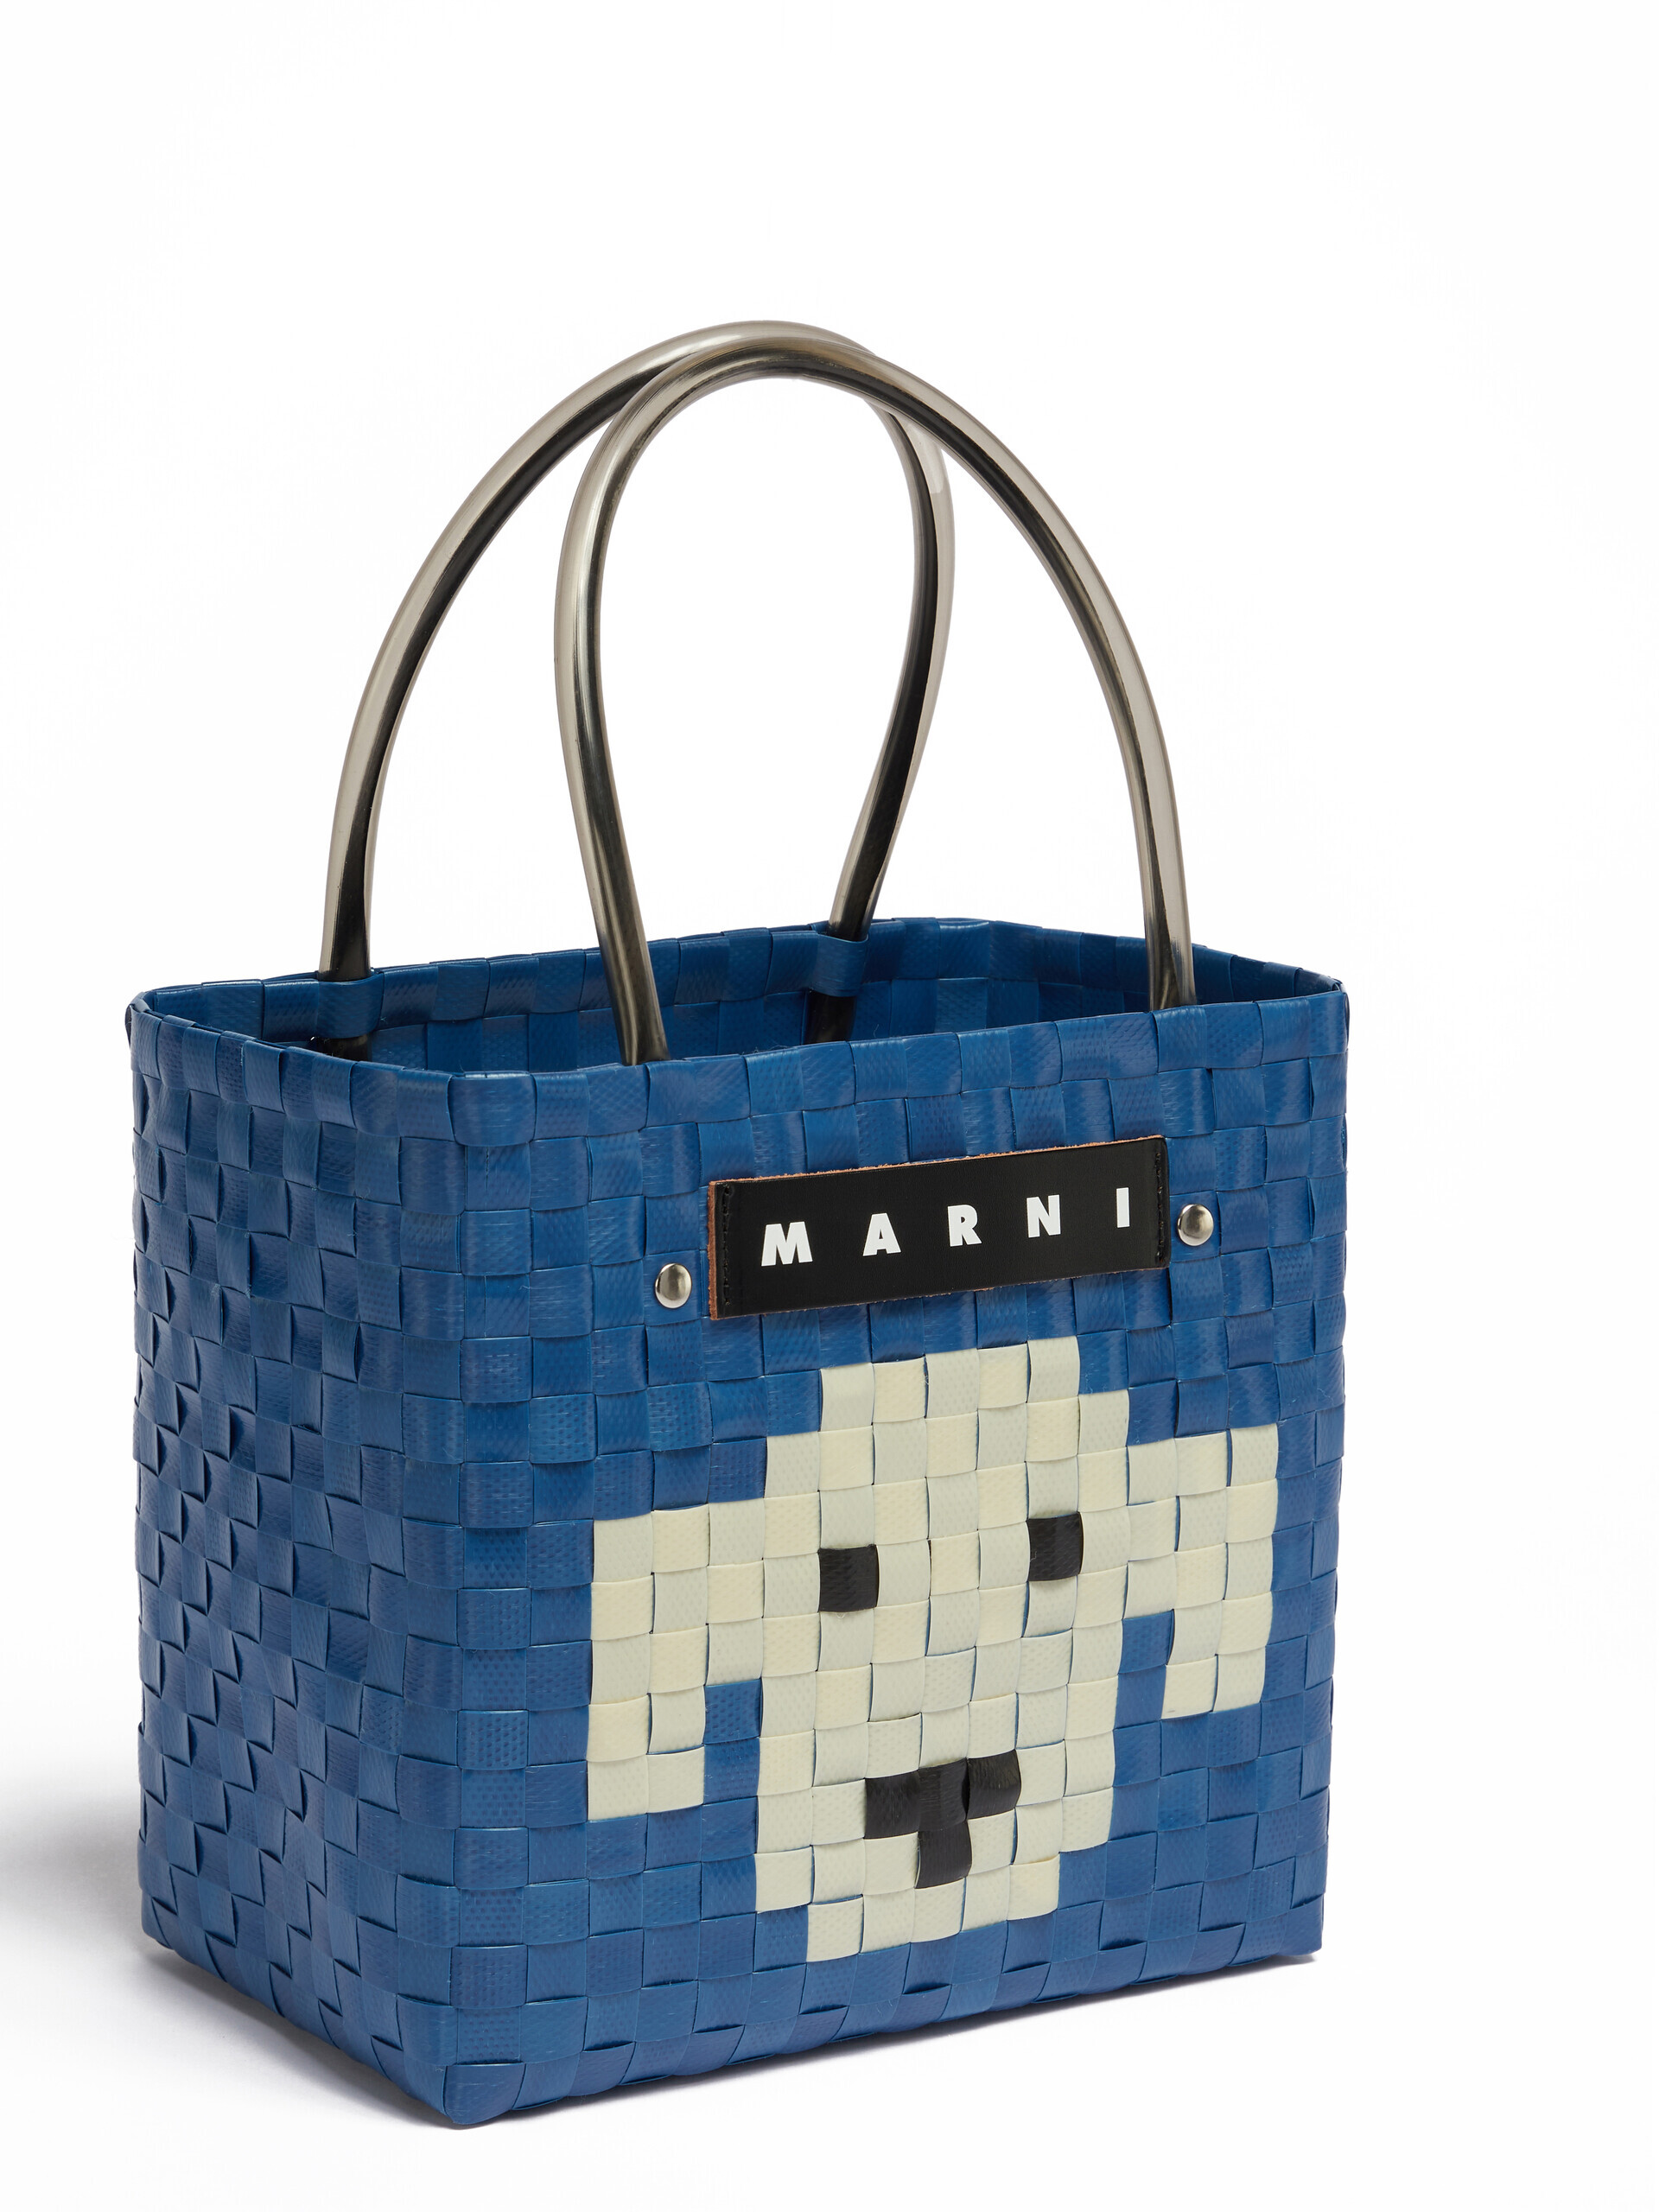 MARNI MARKET ANIMAL BASKET Tasche in Hellrosa - Shopper - Image 4